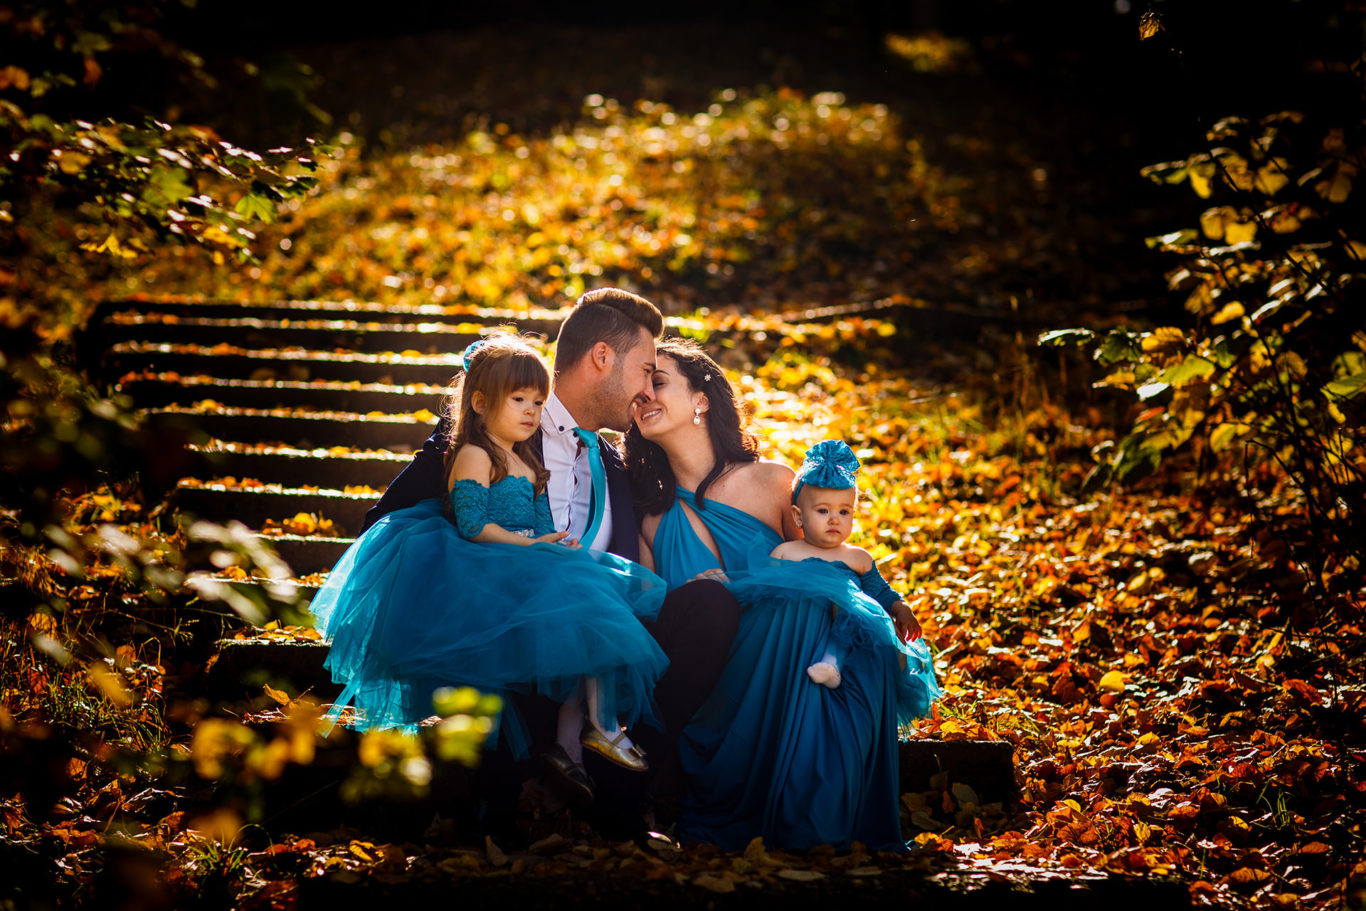 Sesiune foto familie in culori de toamna - Alice family - fotograf familie - Ciprian Dumitrescu - fotograf Bucuresti - fotograf profesionist